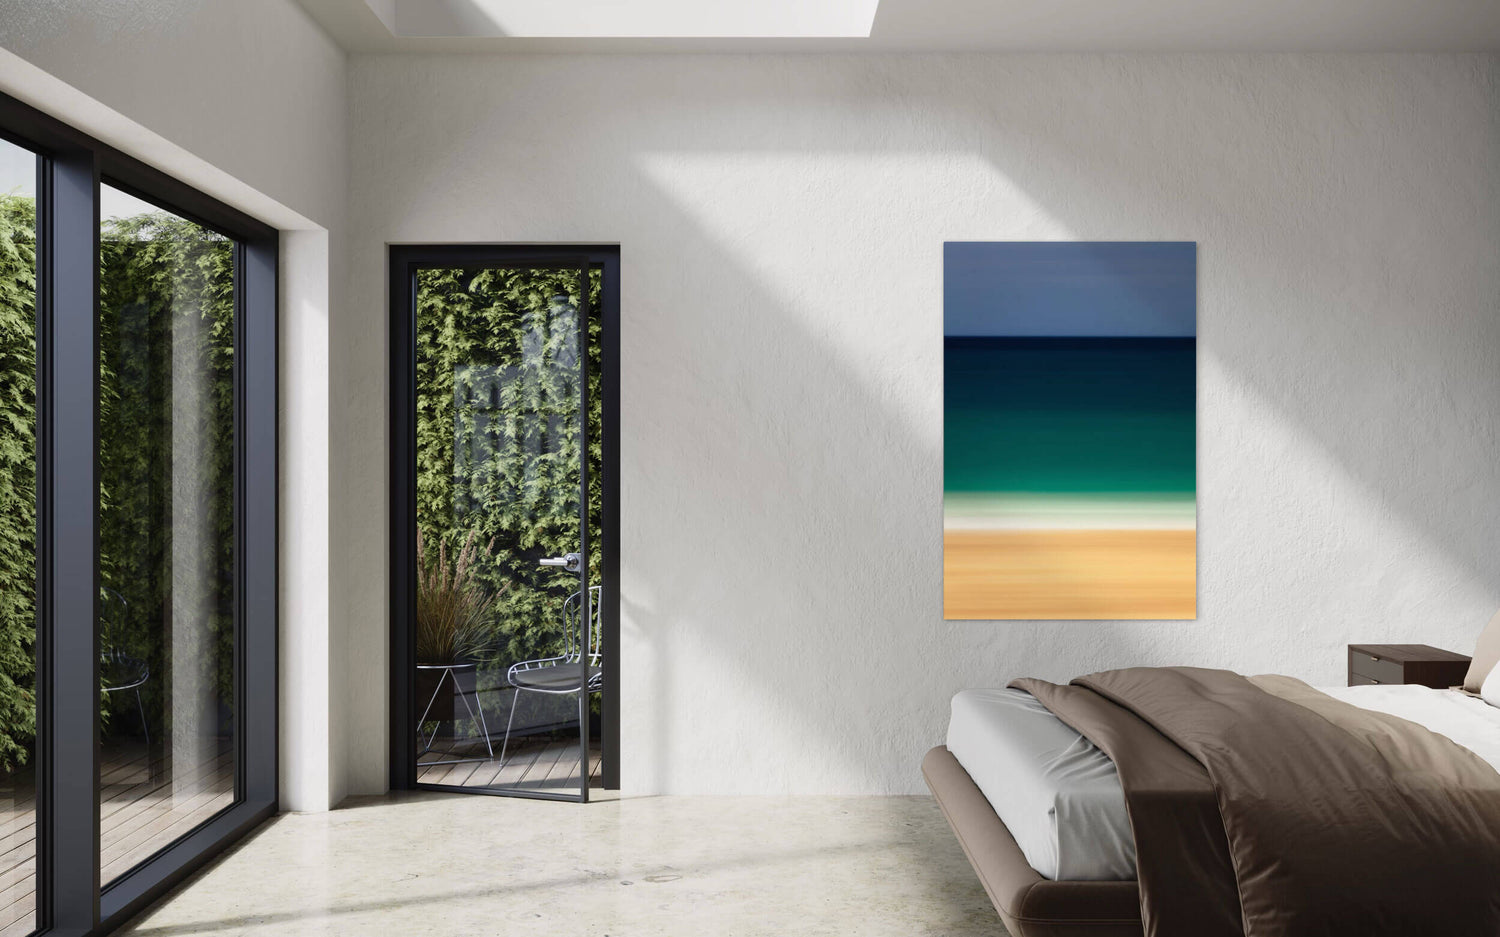 An abstract Kauai beach picture hangs in a living room.